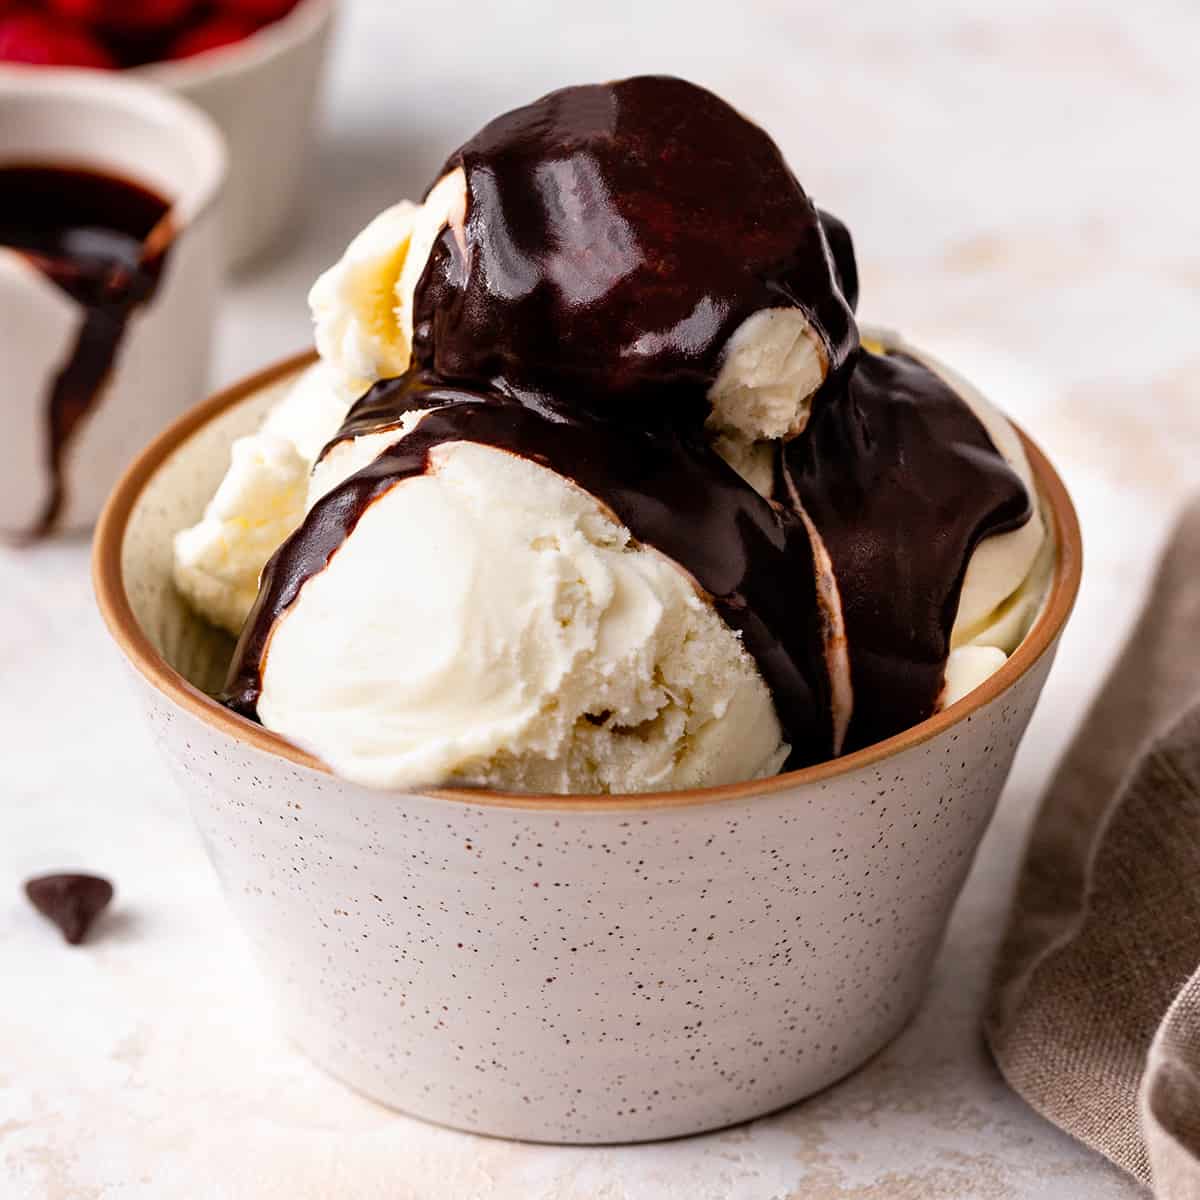 homemade chocolate sauce on top of vanilla ice cream